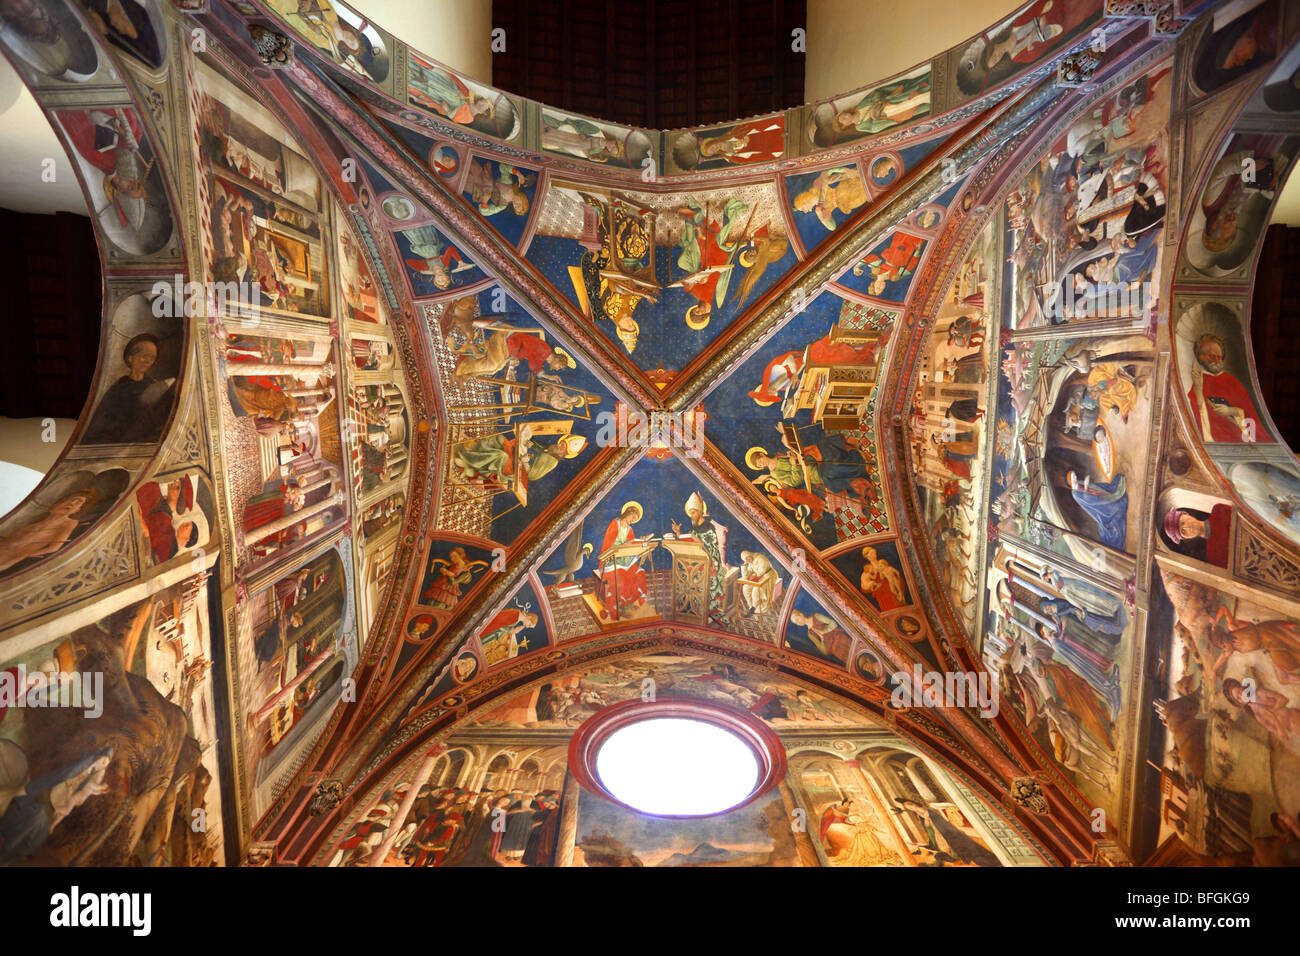 Frescoes inside the 13th century Cathedral Santa Maria Assunta in Atri, Abruzzo, Italy. Stock Photo